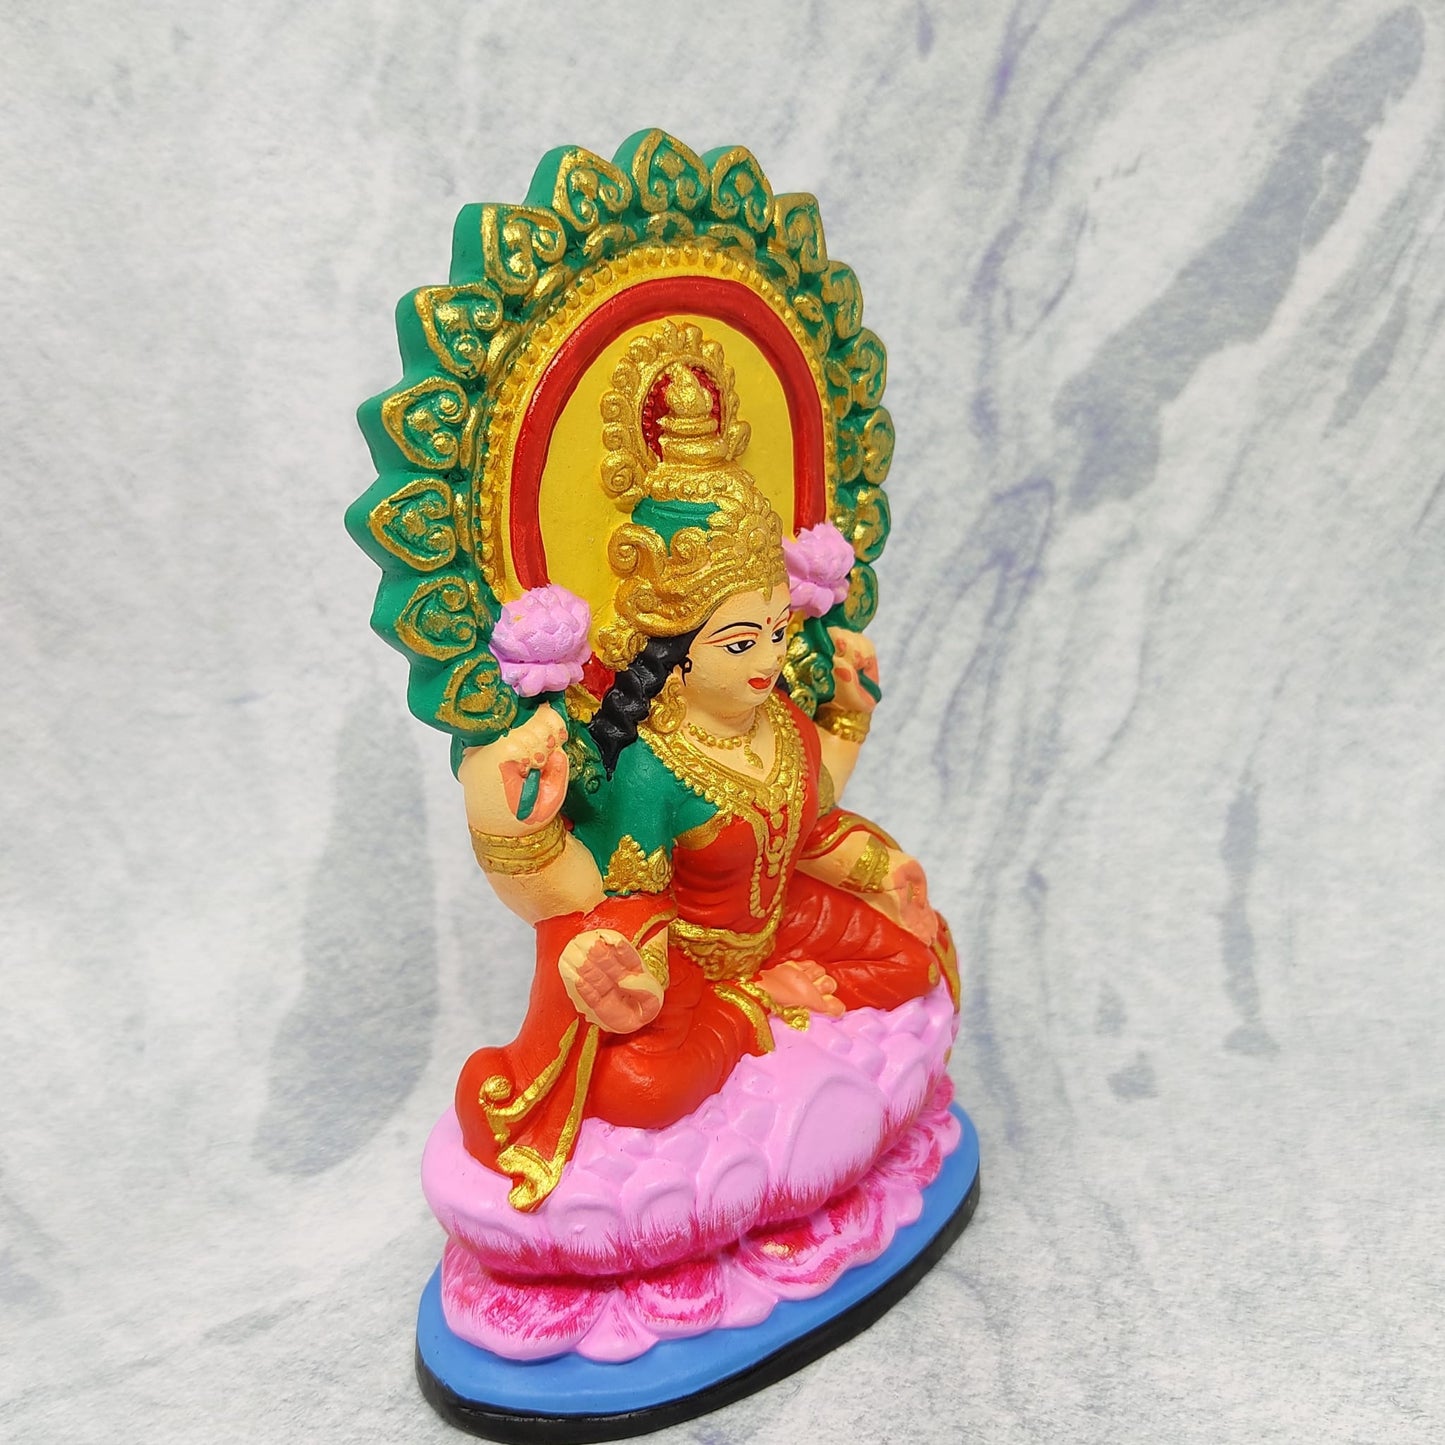 Lakshmi Ma Ganges Clay Deity India Prosperity Goddess Handmade Statue 6.25"